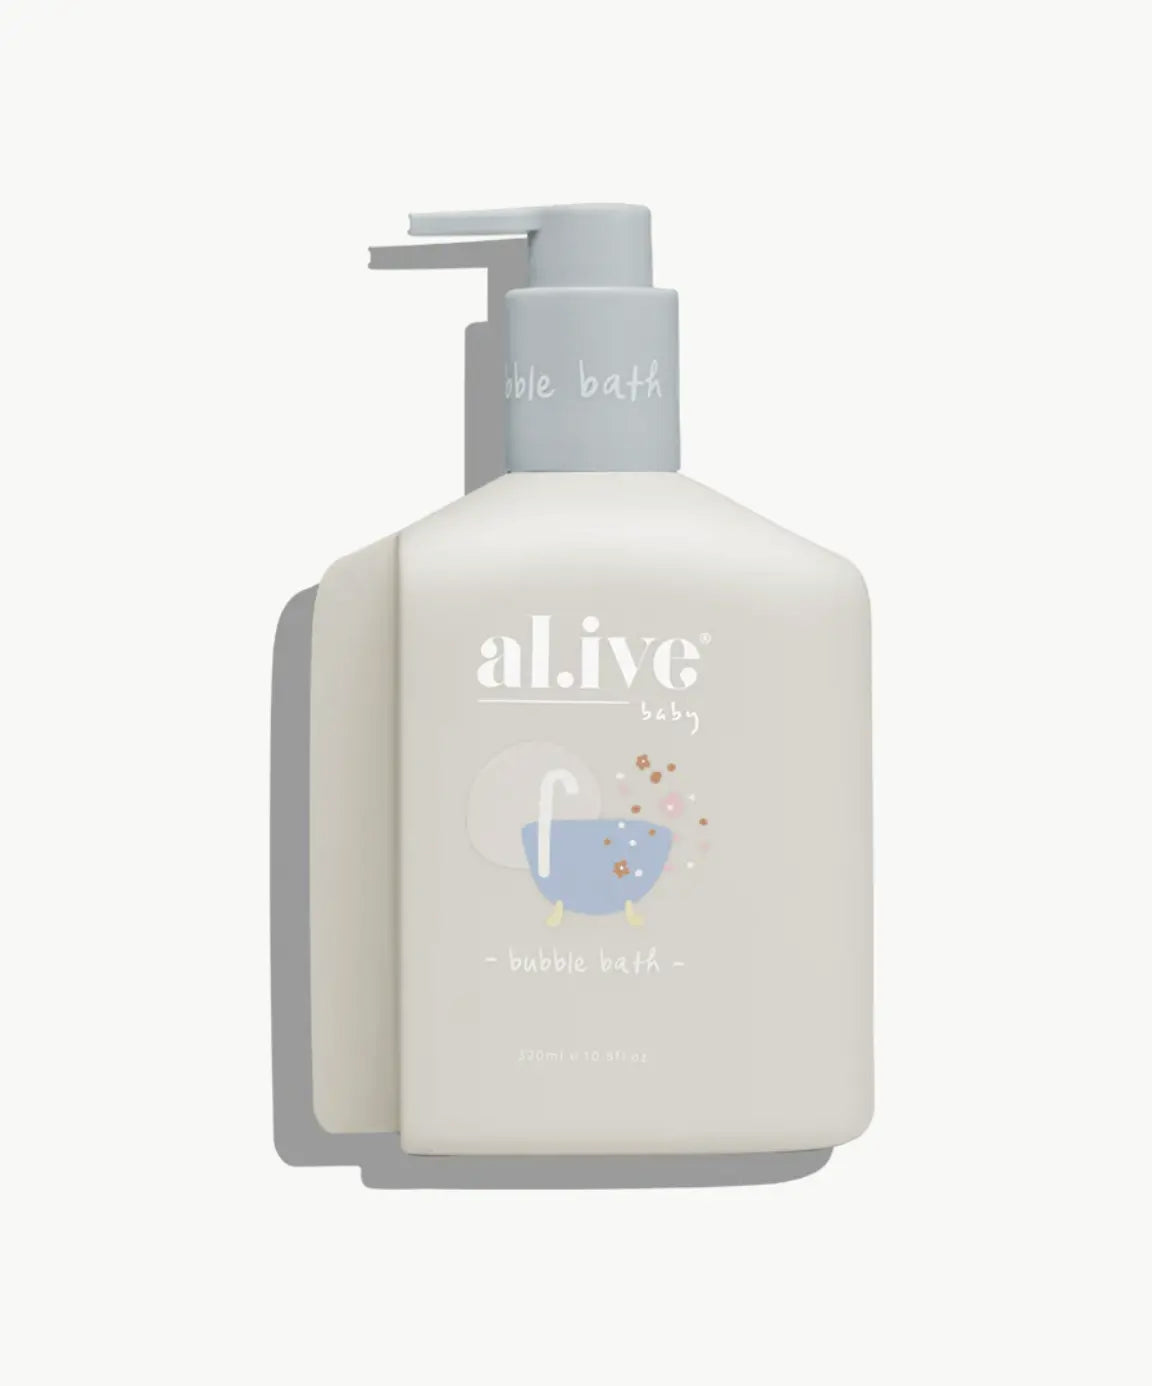 al.ive - Bubble Bath - Apple Blossom